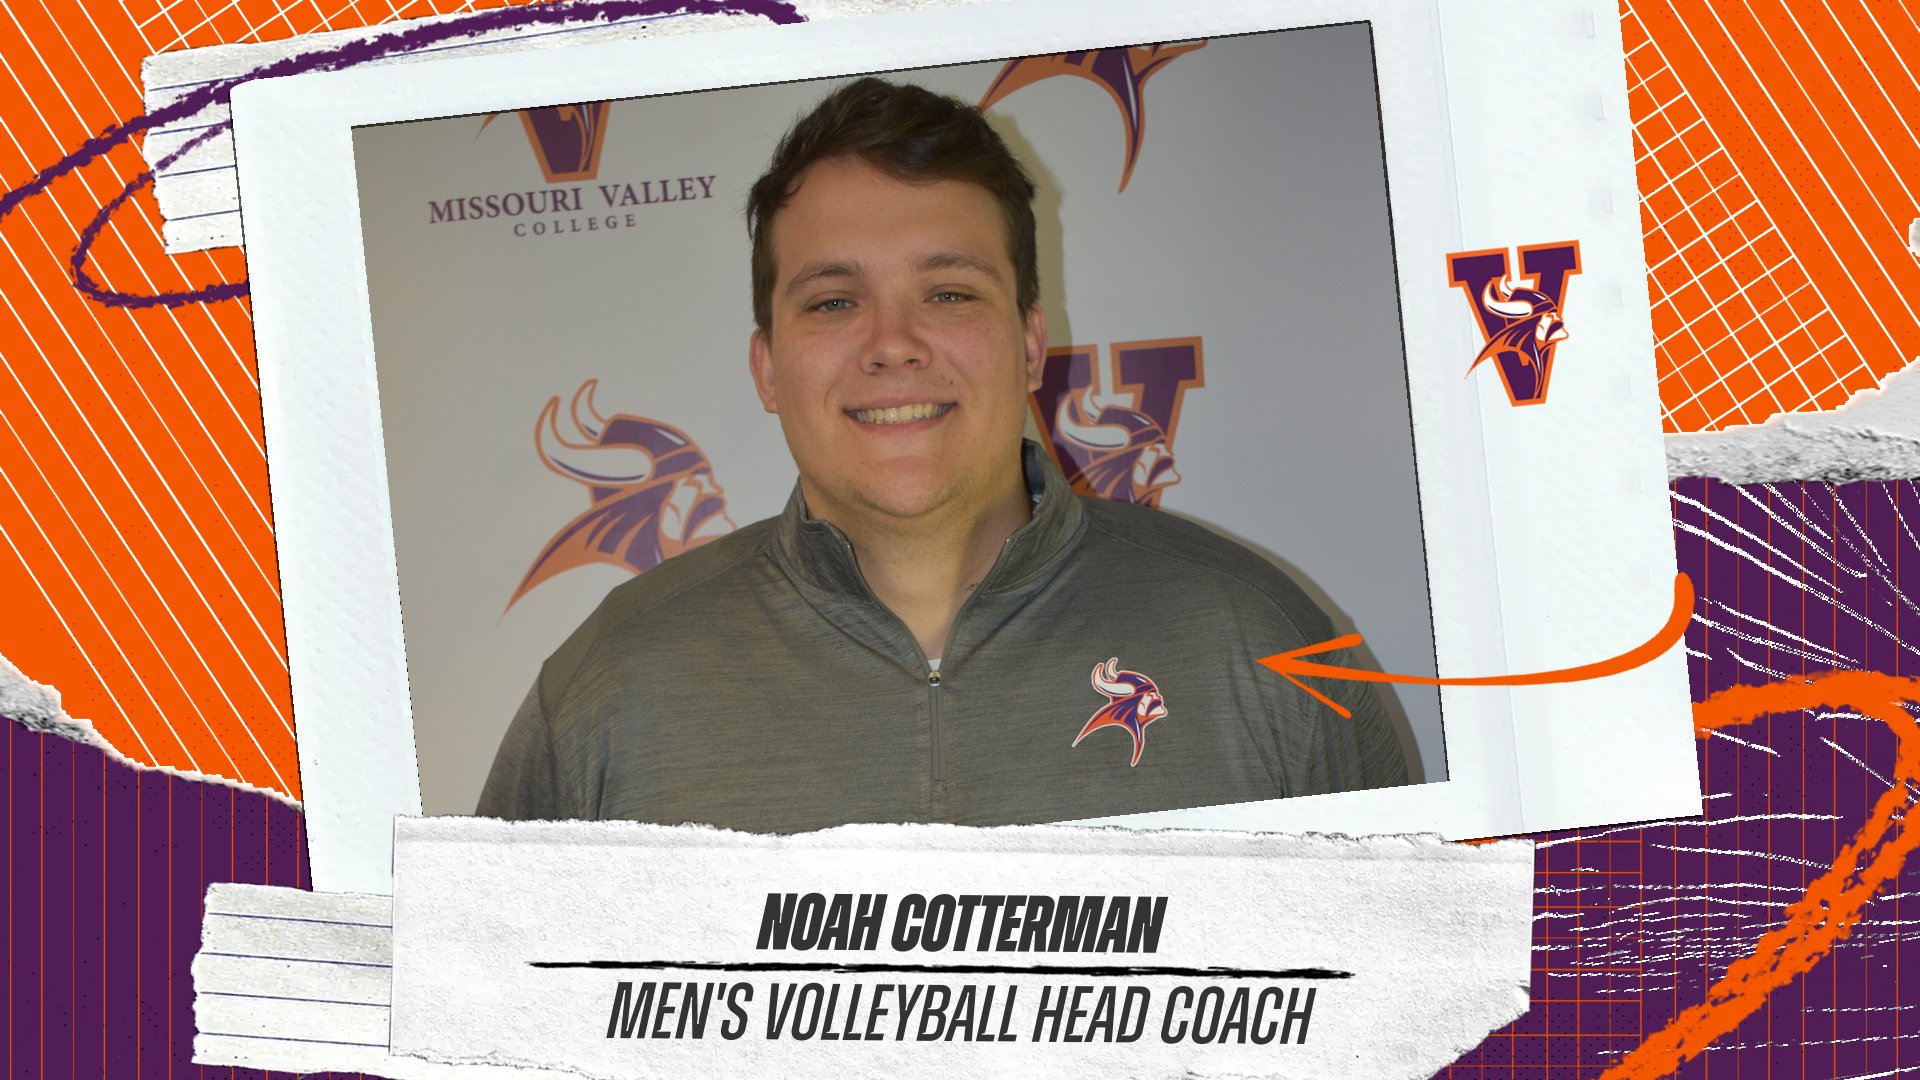 Noah Cotterman Announced as New Men's Volleyball Head Coach